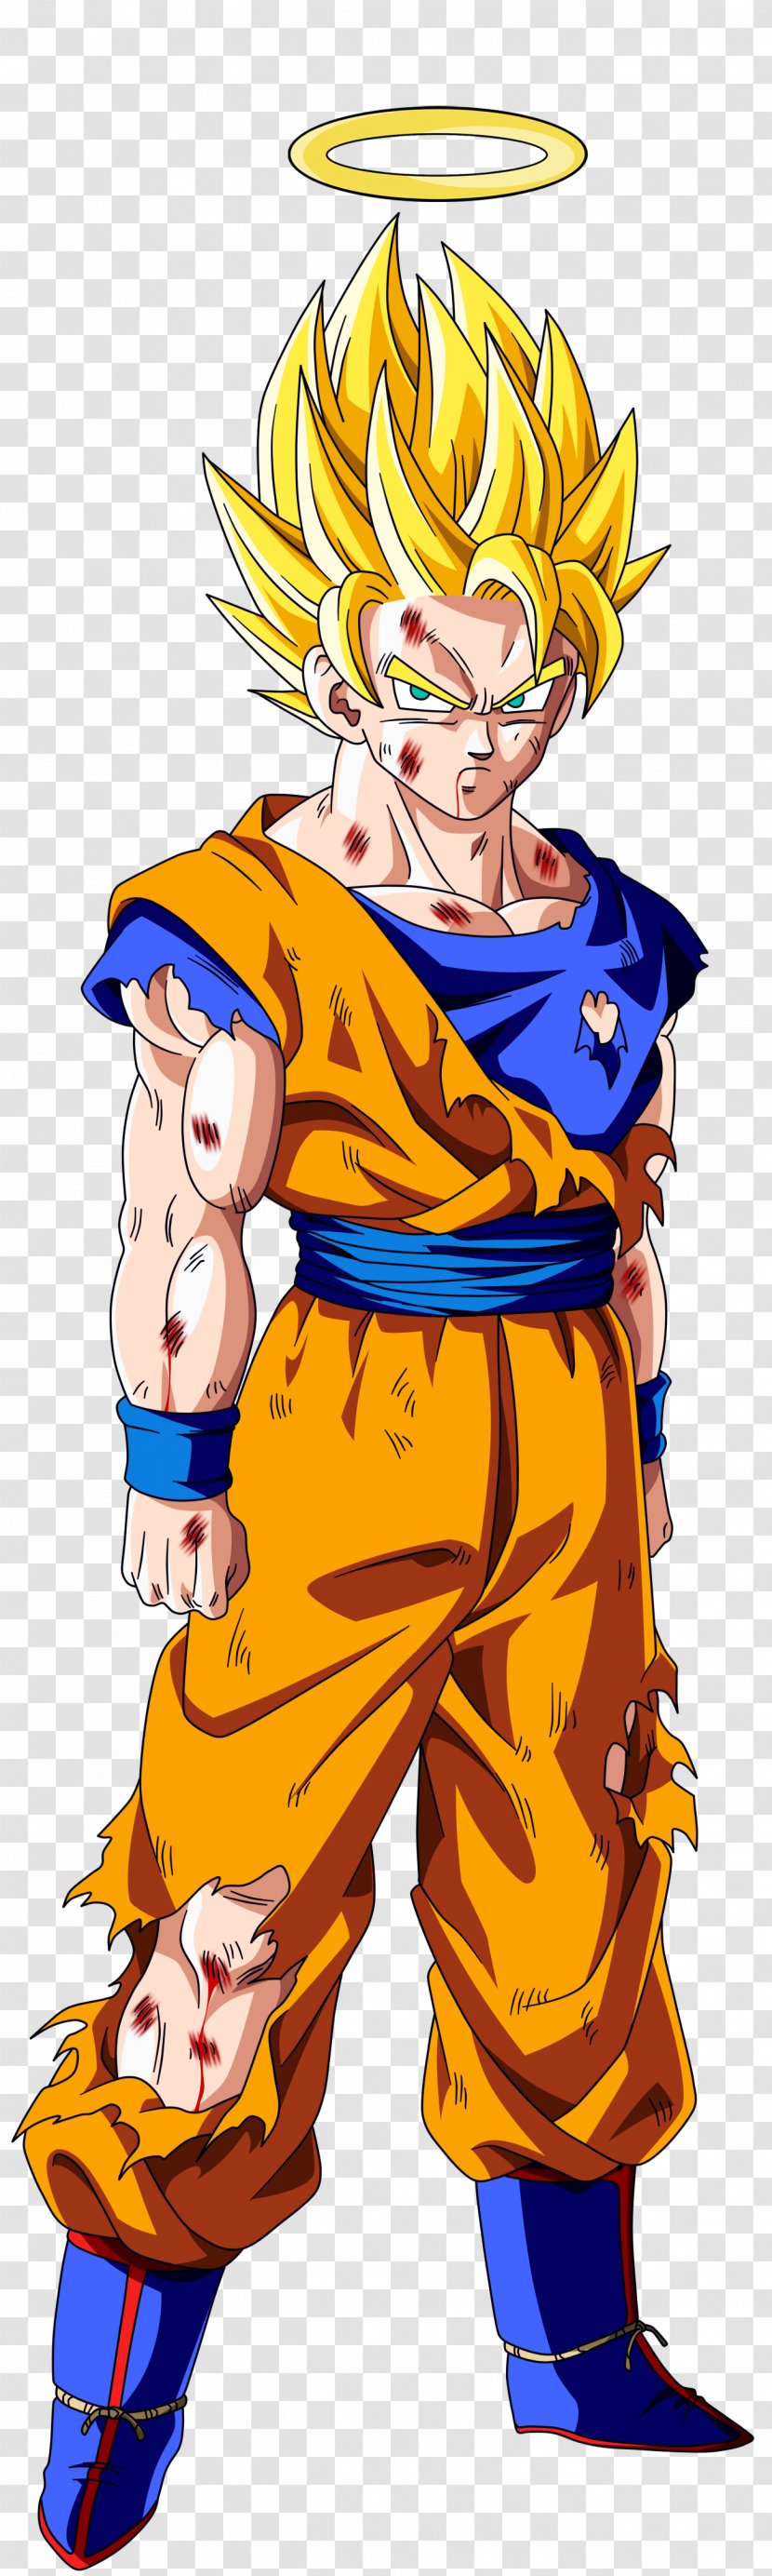 Goku Vegeta Gohan Cell Trunks - Piccolo - Dragon Ball Z Transparent PNG